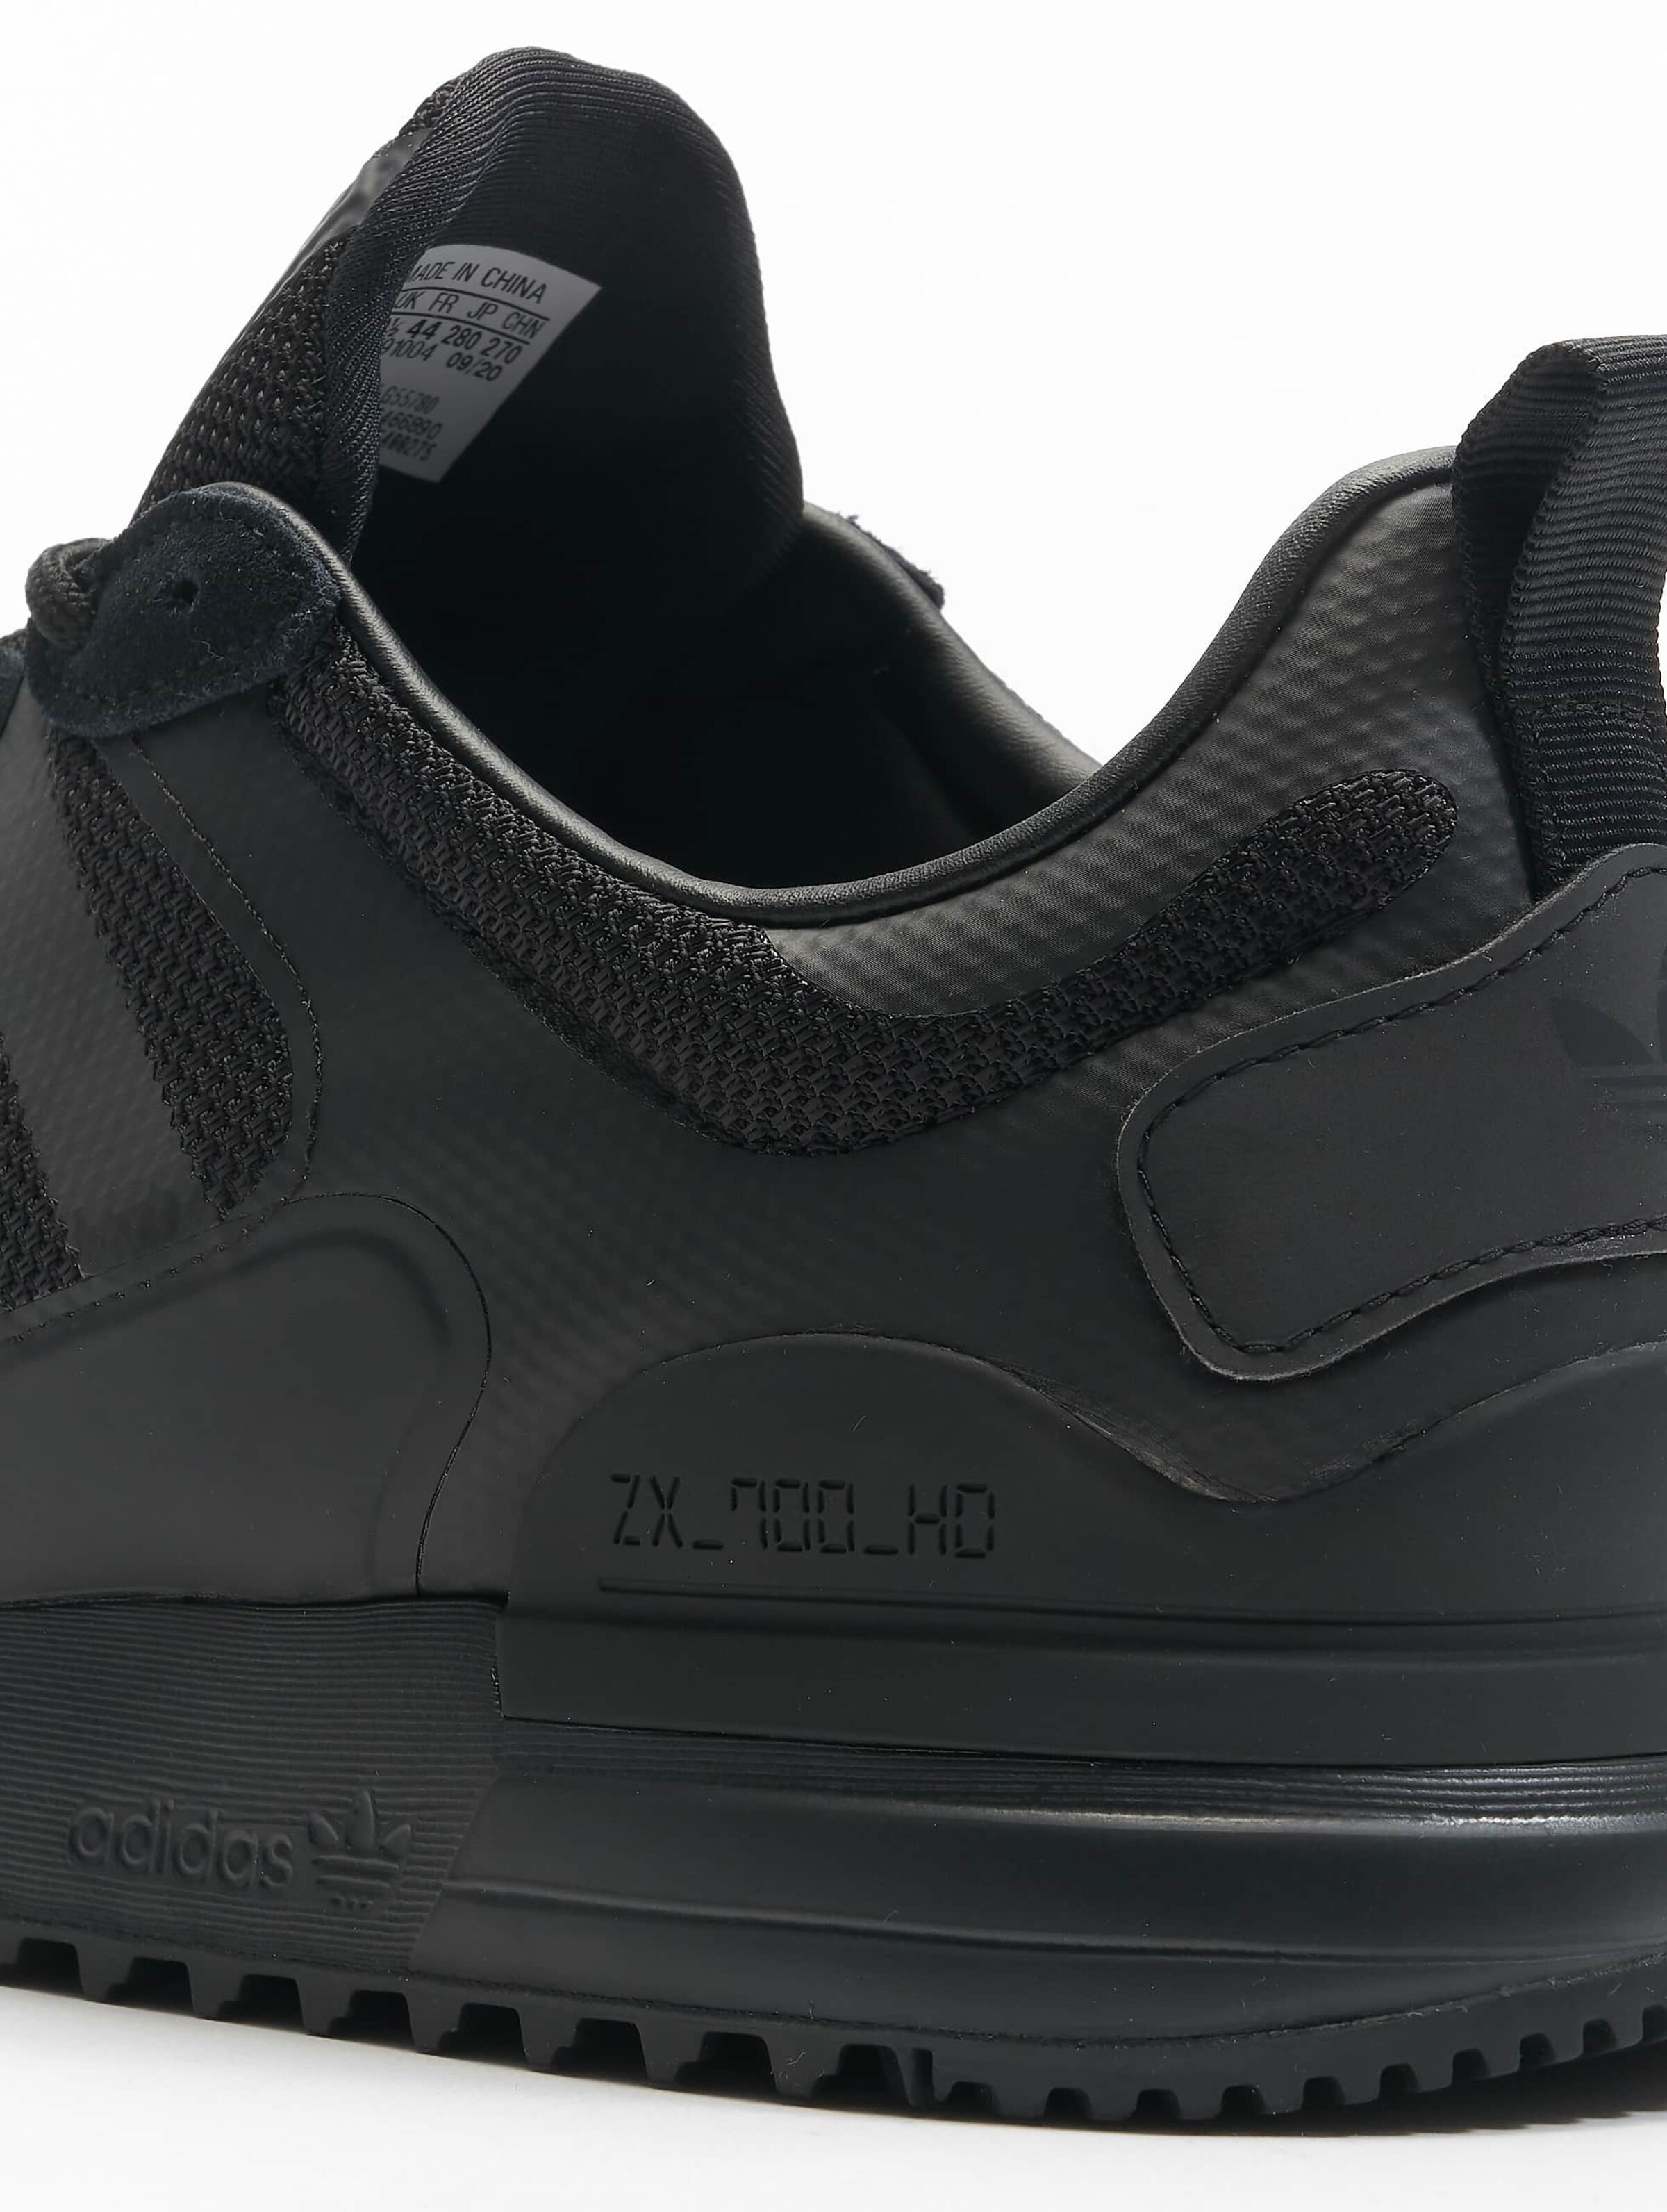 adidas Originals ZX 700 HD Sneaker